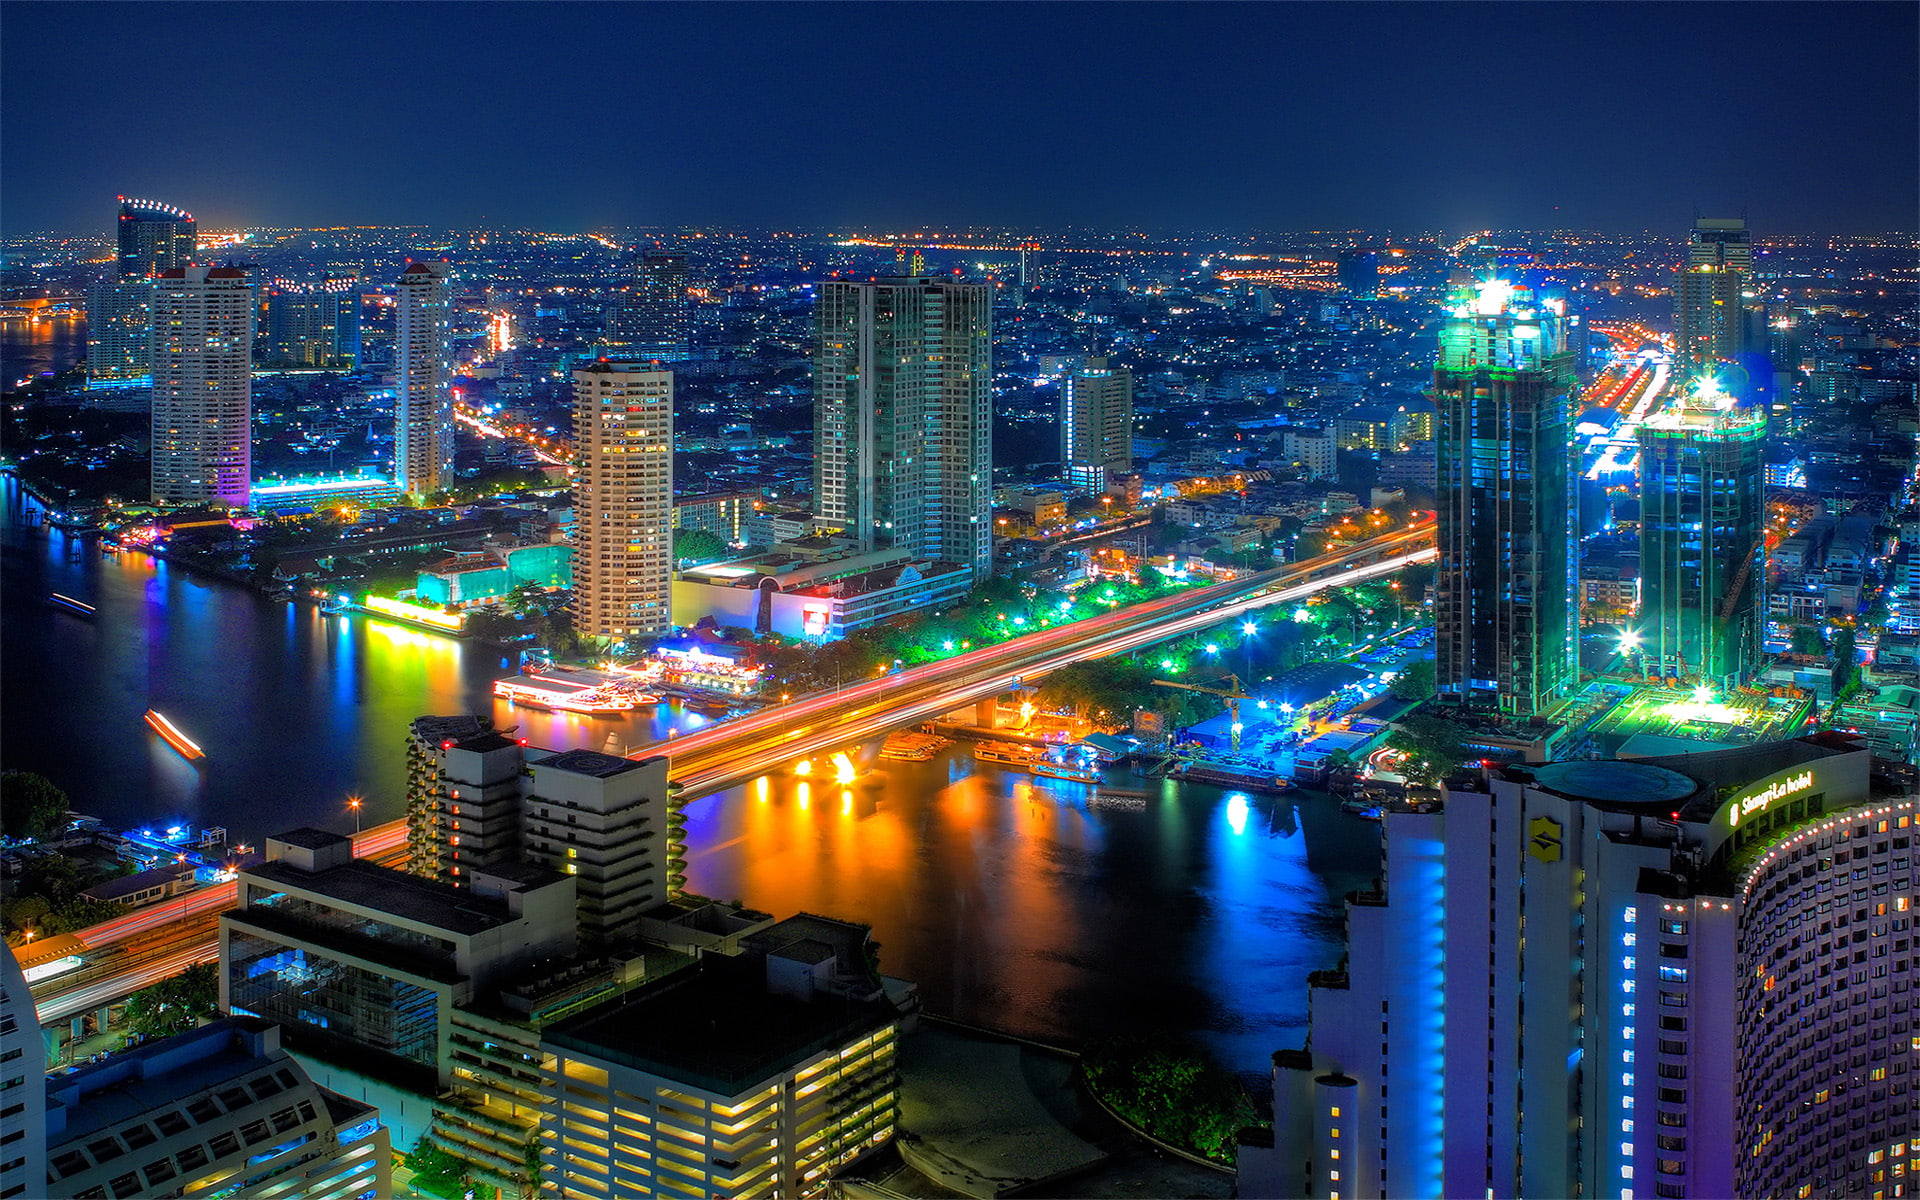 Bangkok Thailand Night Panorama Of The City River Bridge Street Lamps Lighted Buildings Wallpaper Hd 1920×1200